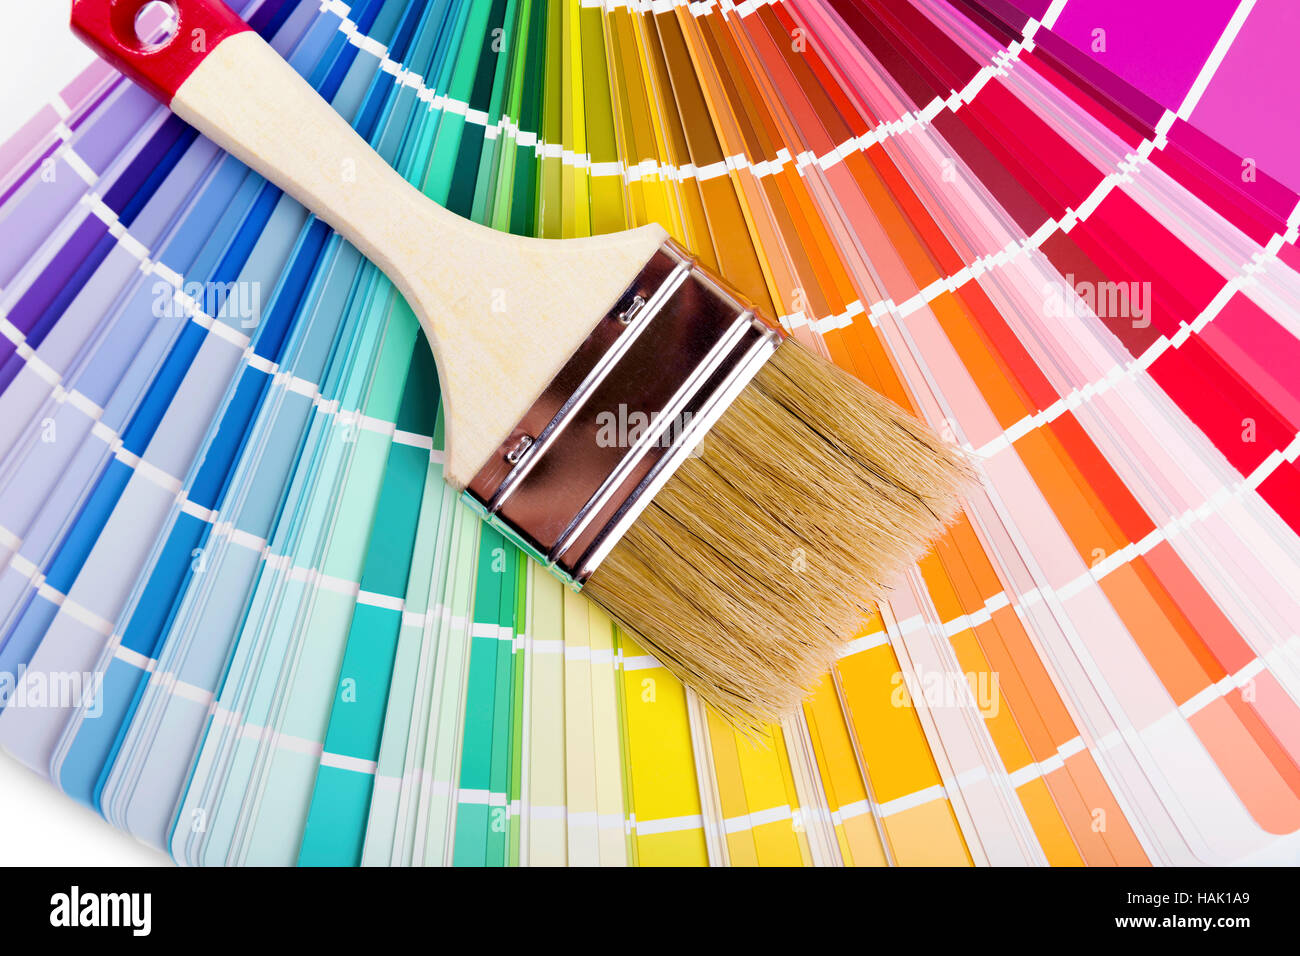 Katalog mit Farbproben Farbe und Pinsel Stockfoto